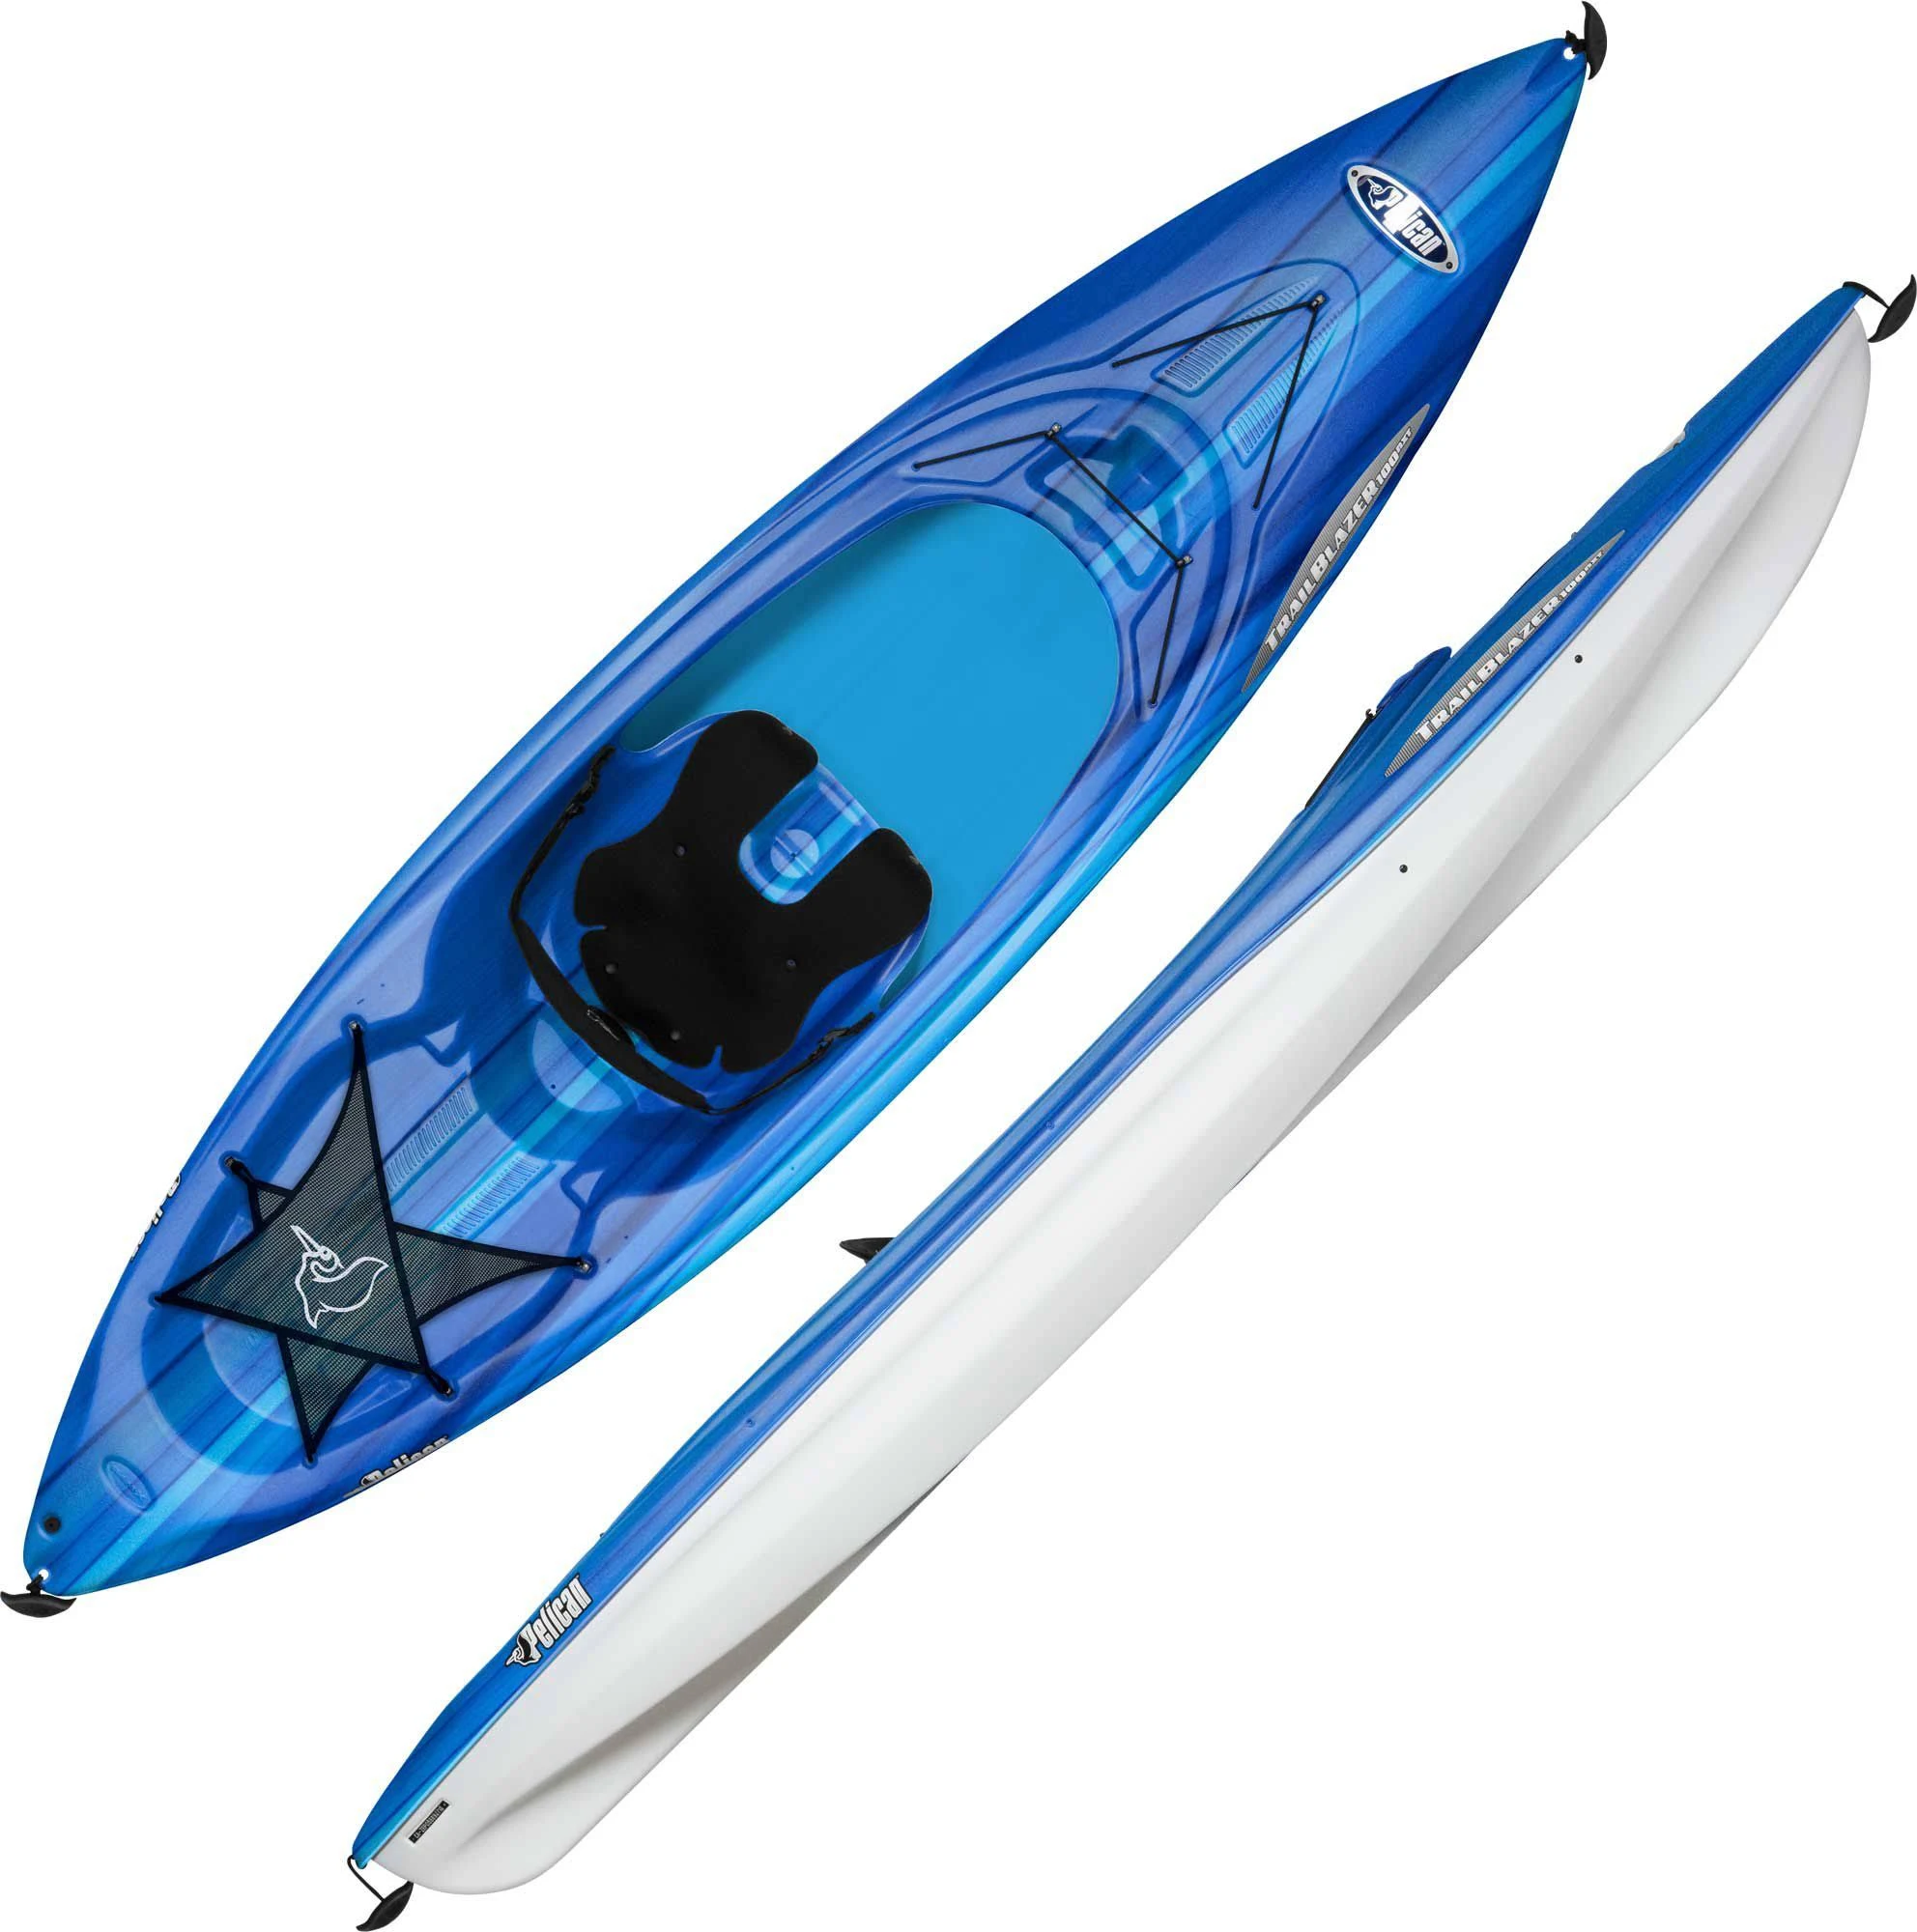 Pelican Trailblazer 100 NXT Kayak, Fade Deep Blue/White